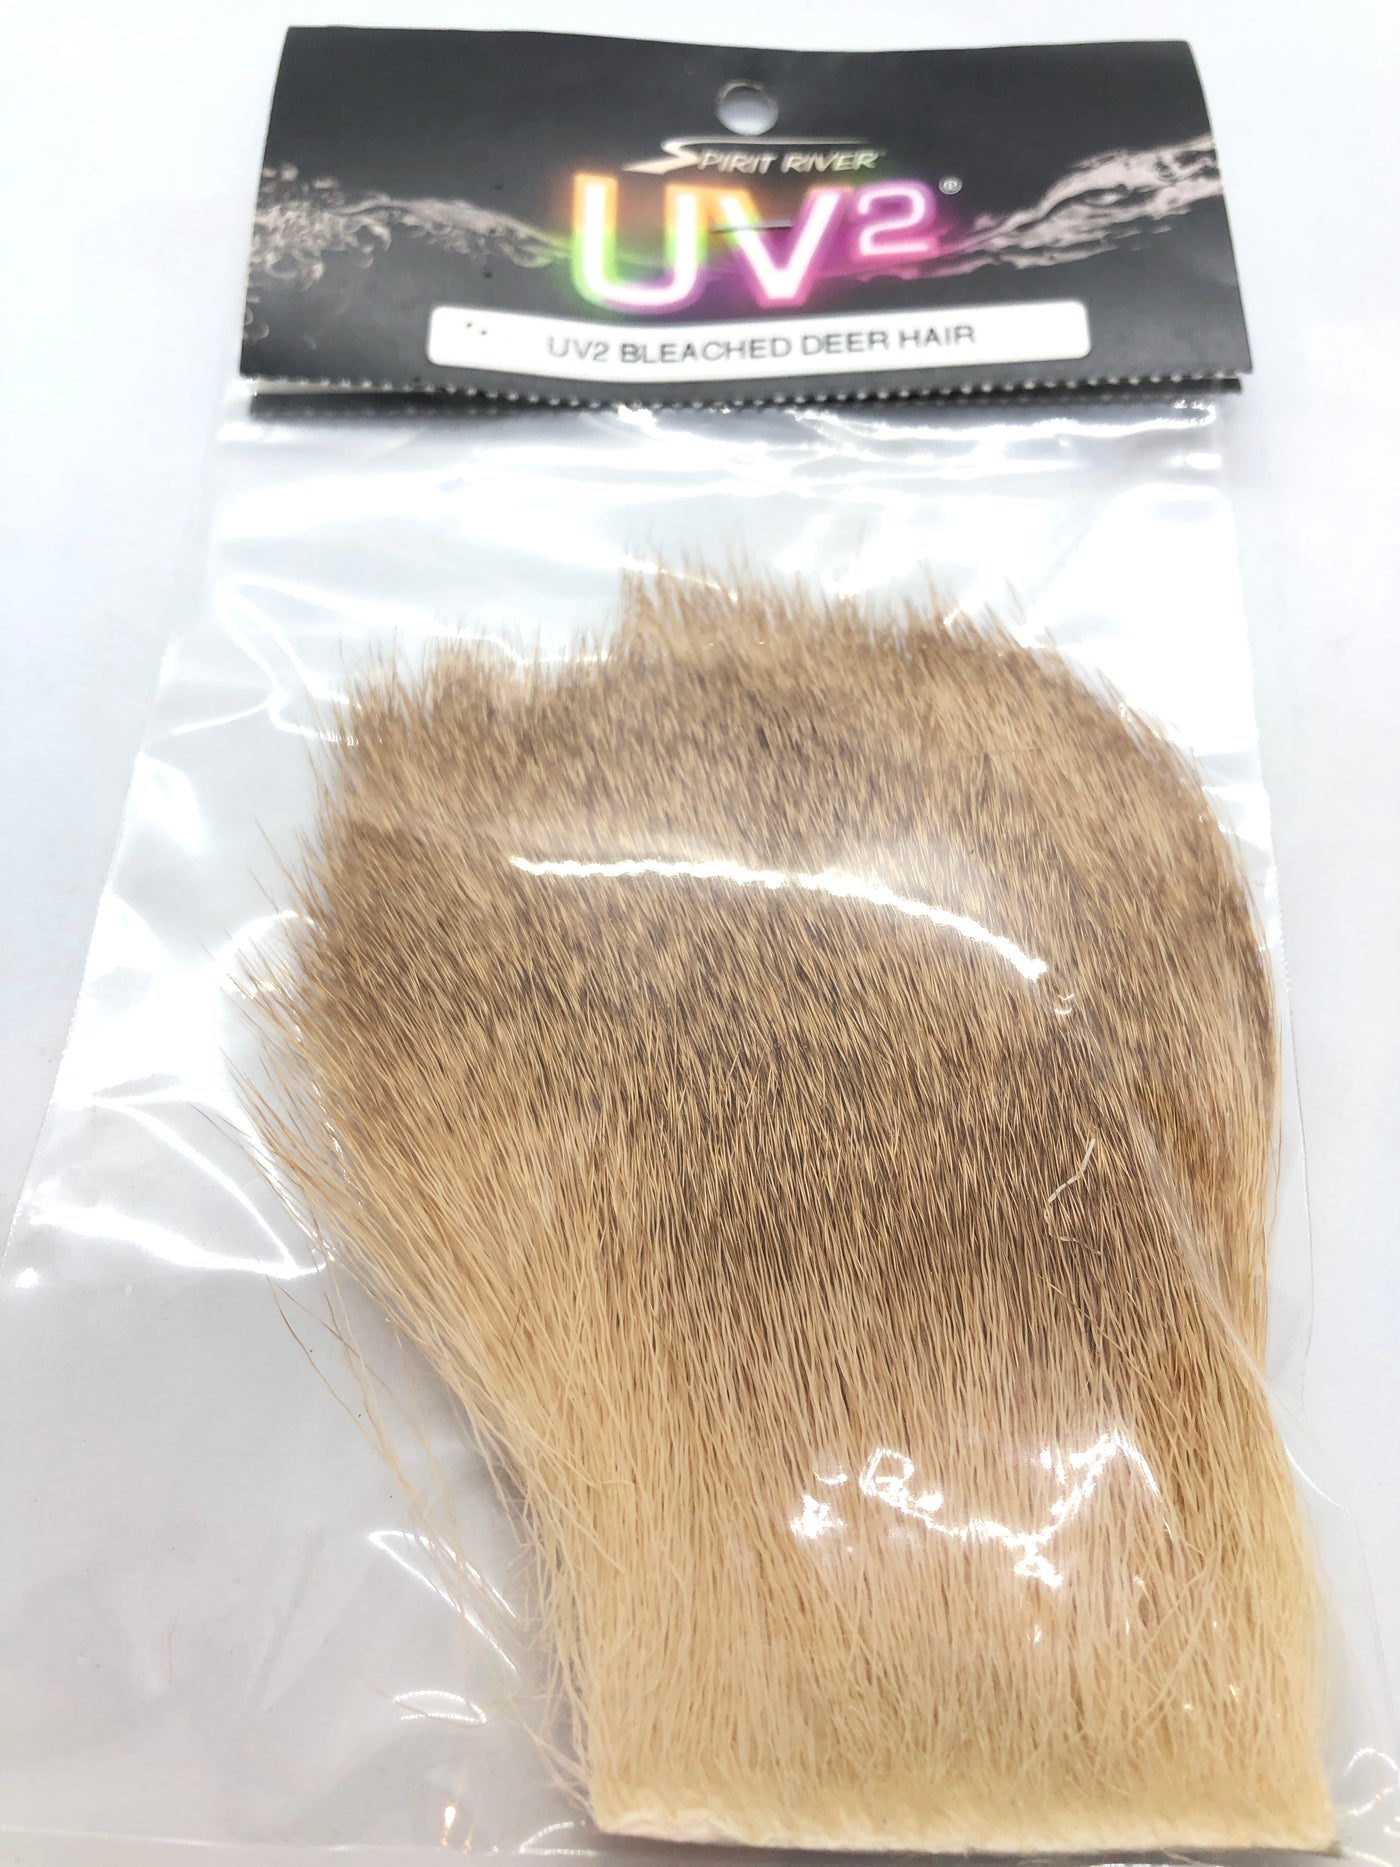 Spirit River UV2 Bleached Deer Hair